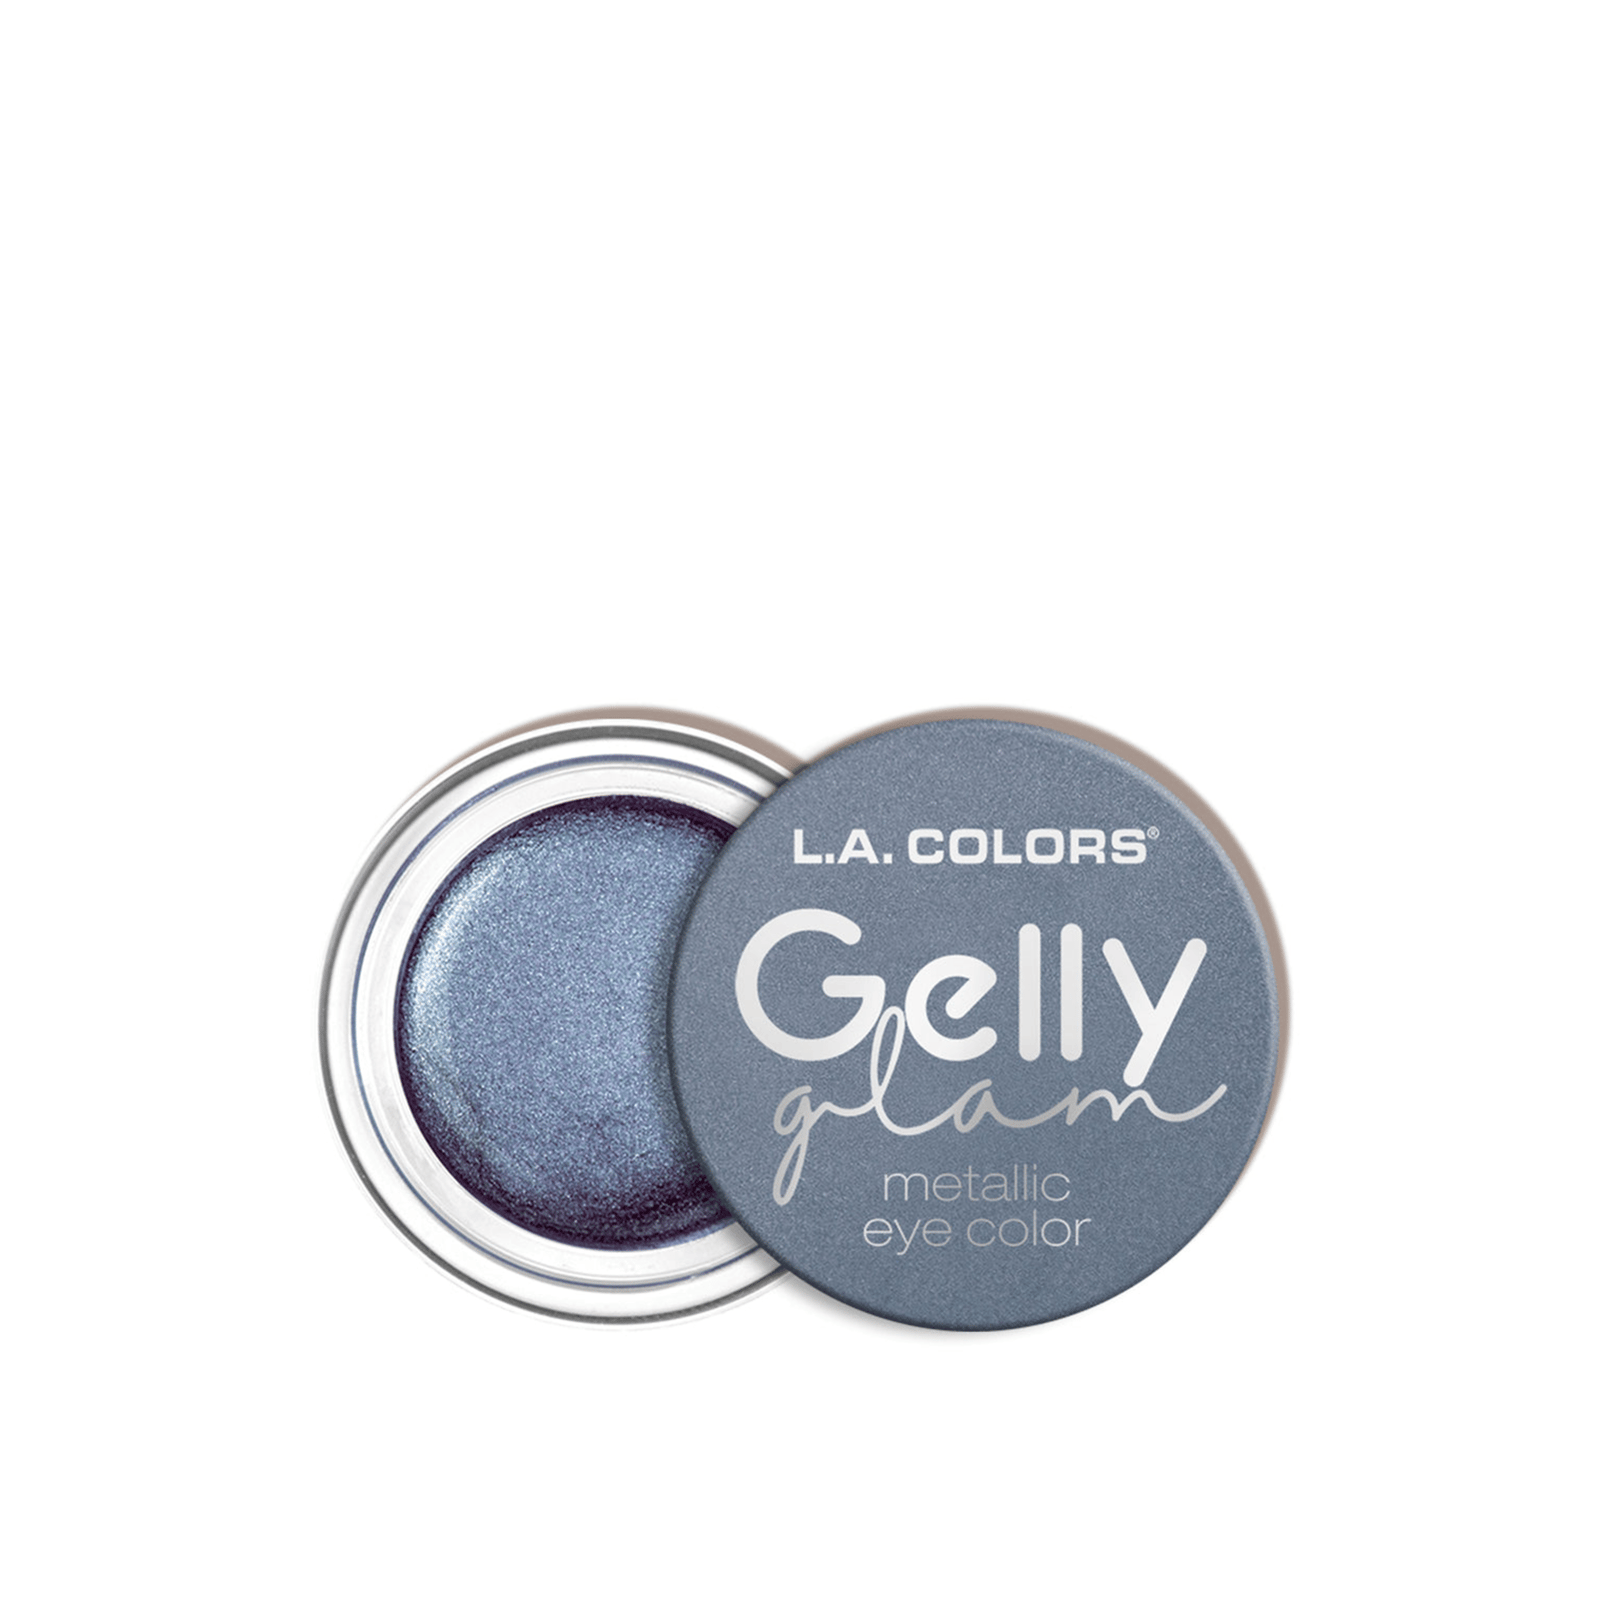 L.A Colors Gelly Glam Metallic Eye Color CES288 Blue Lightning 5ml (0.17 fl oz)